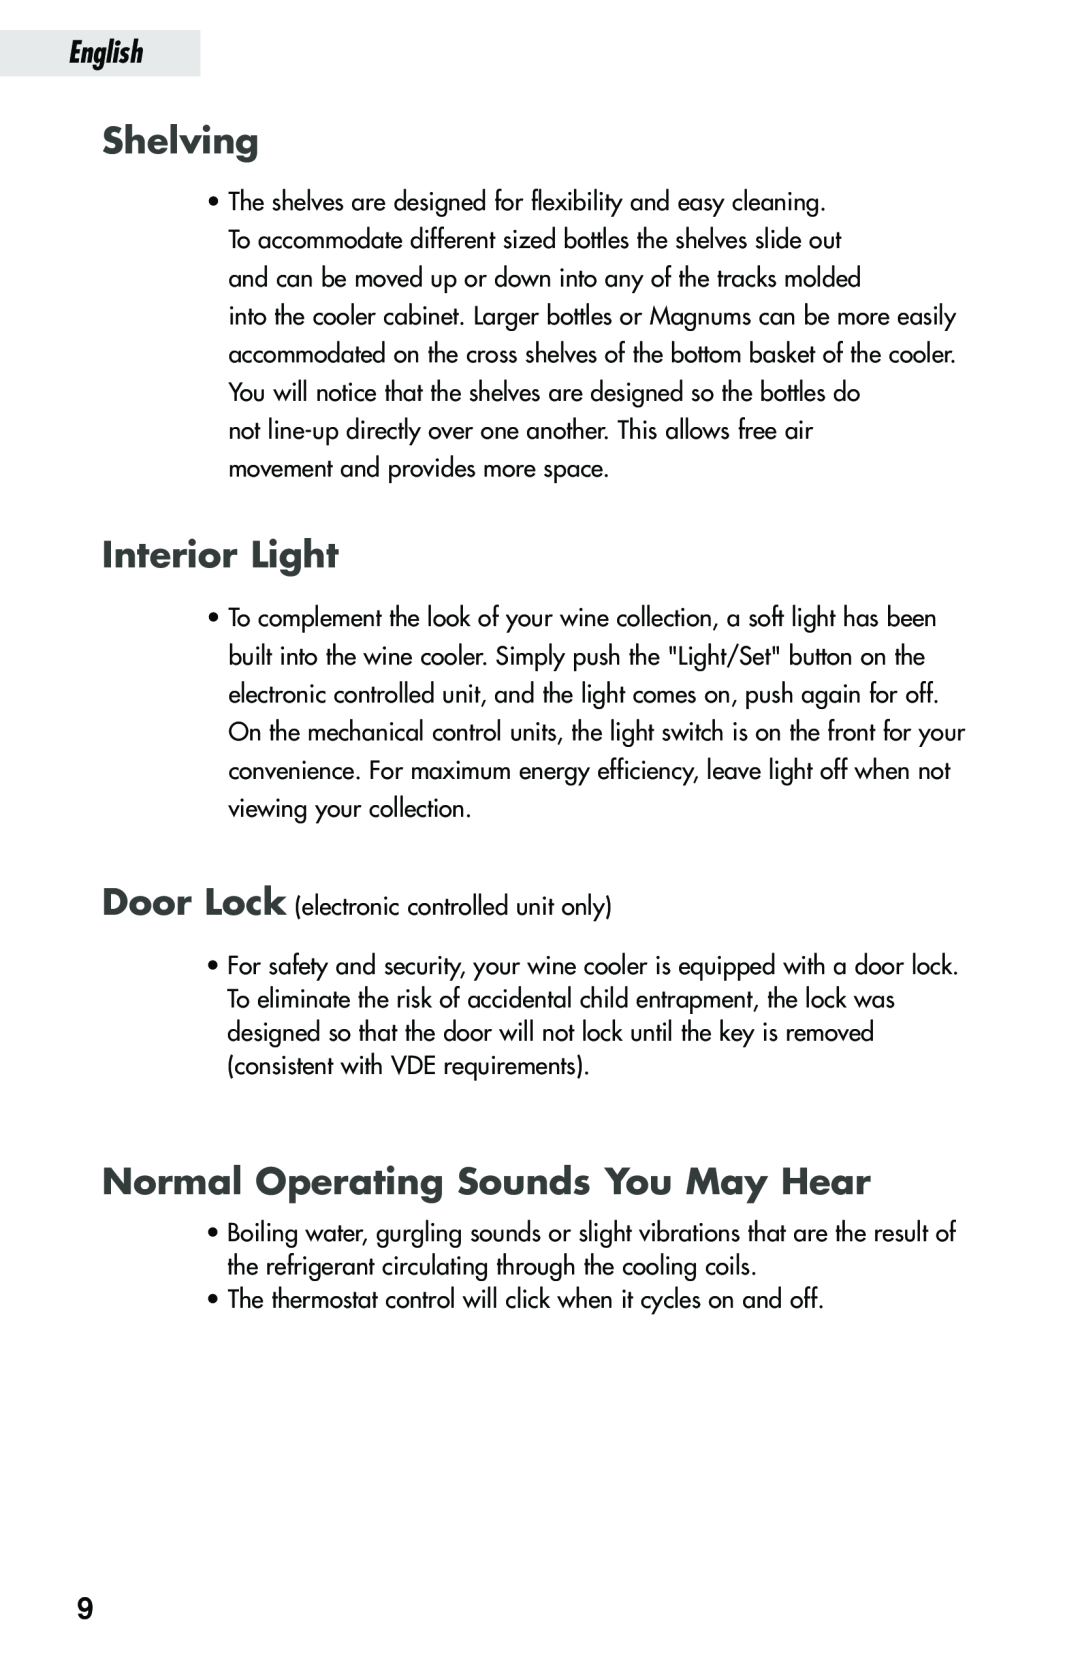 Haier JC-82GB manual Shelving, Interior Light, Normal Operating Sounds You May Hear, English 